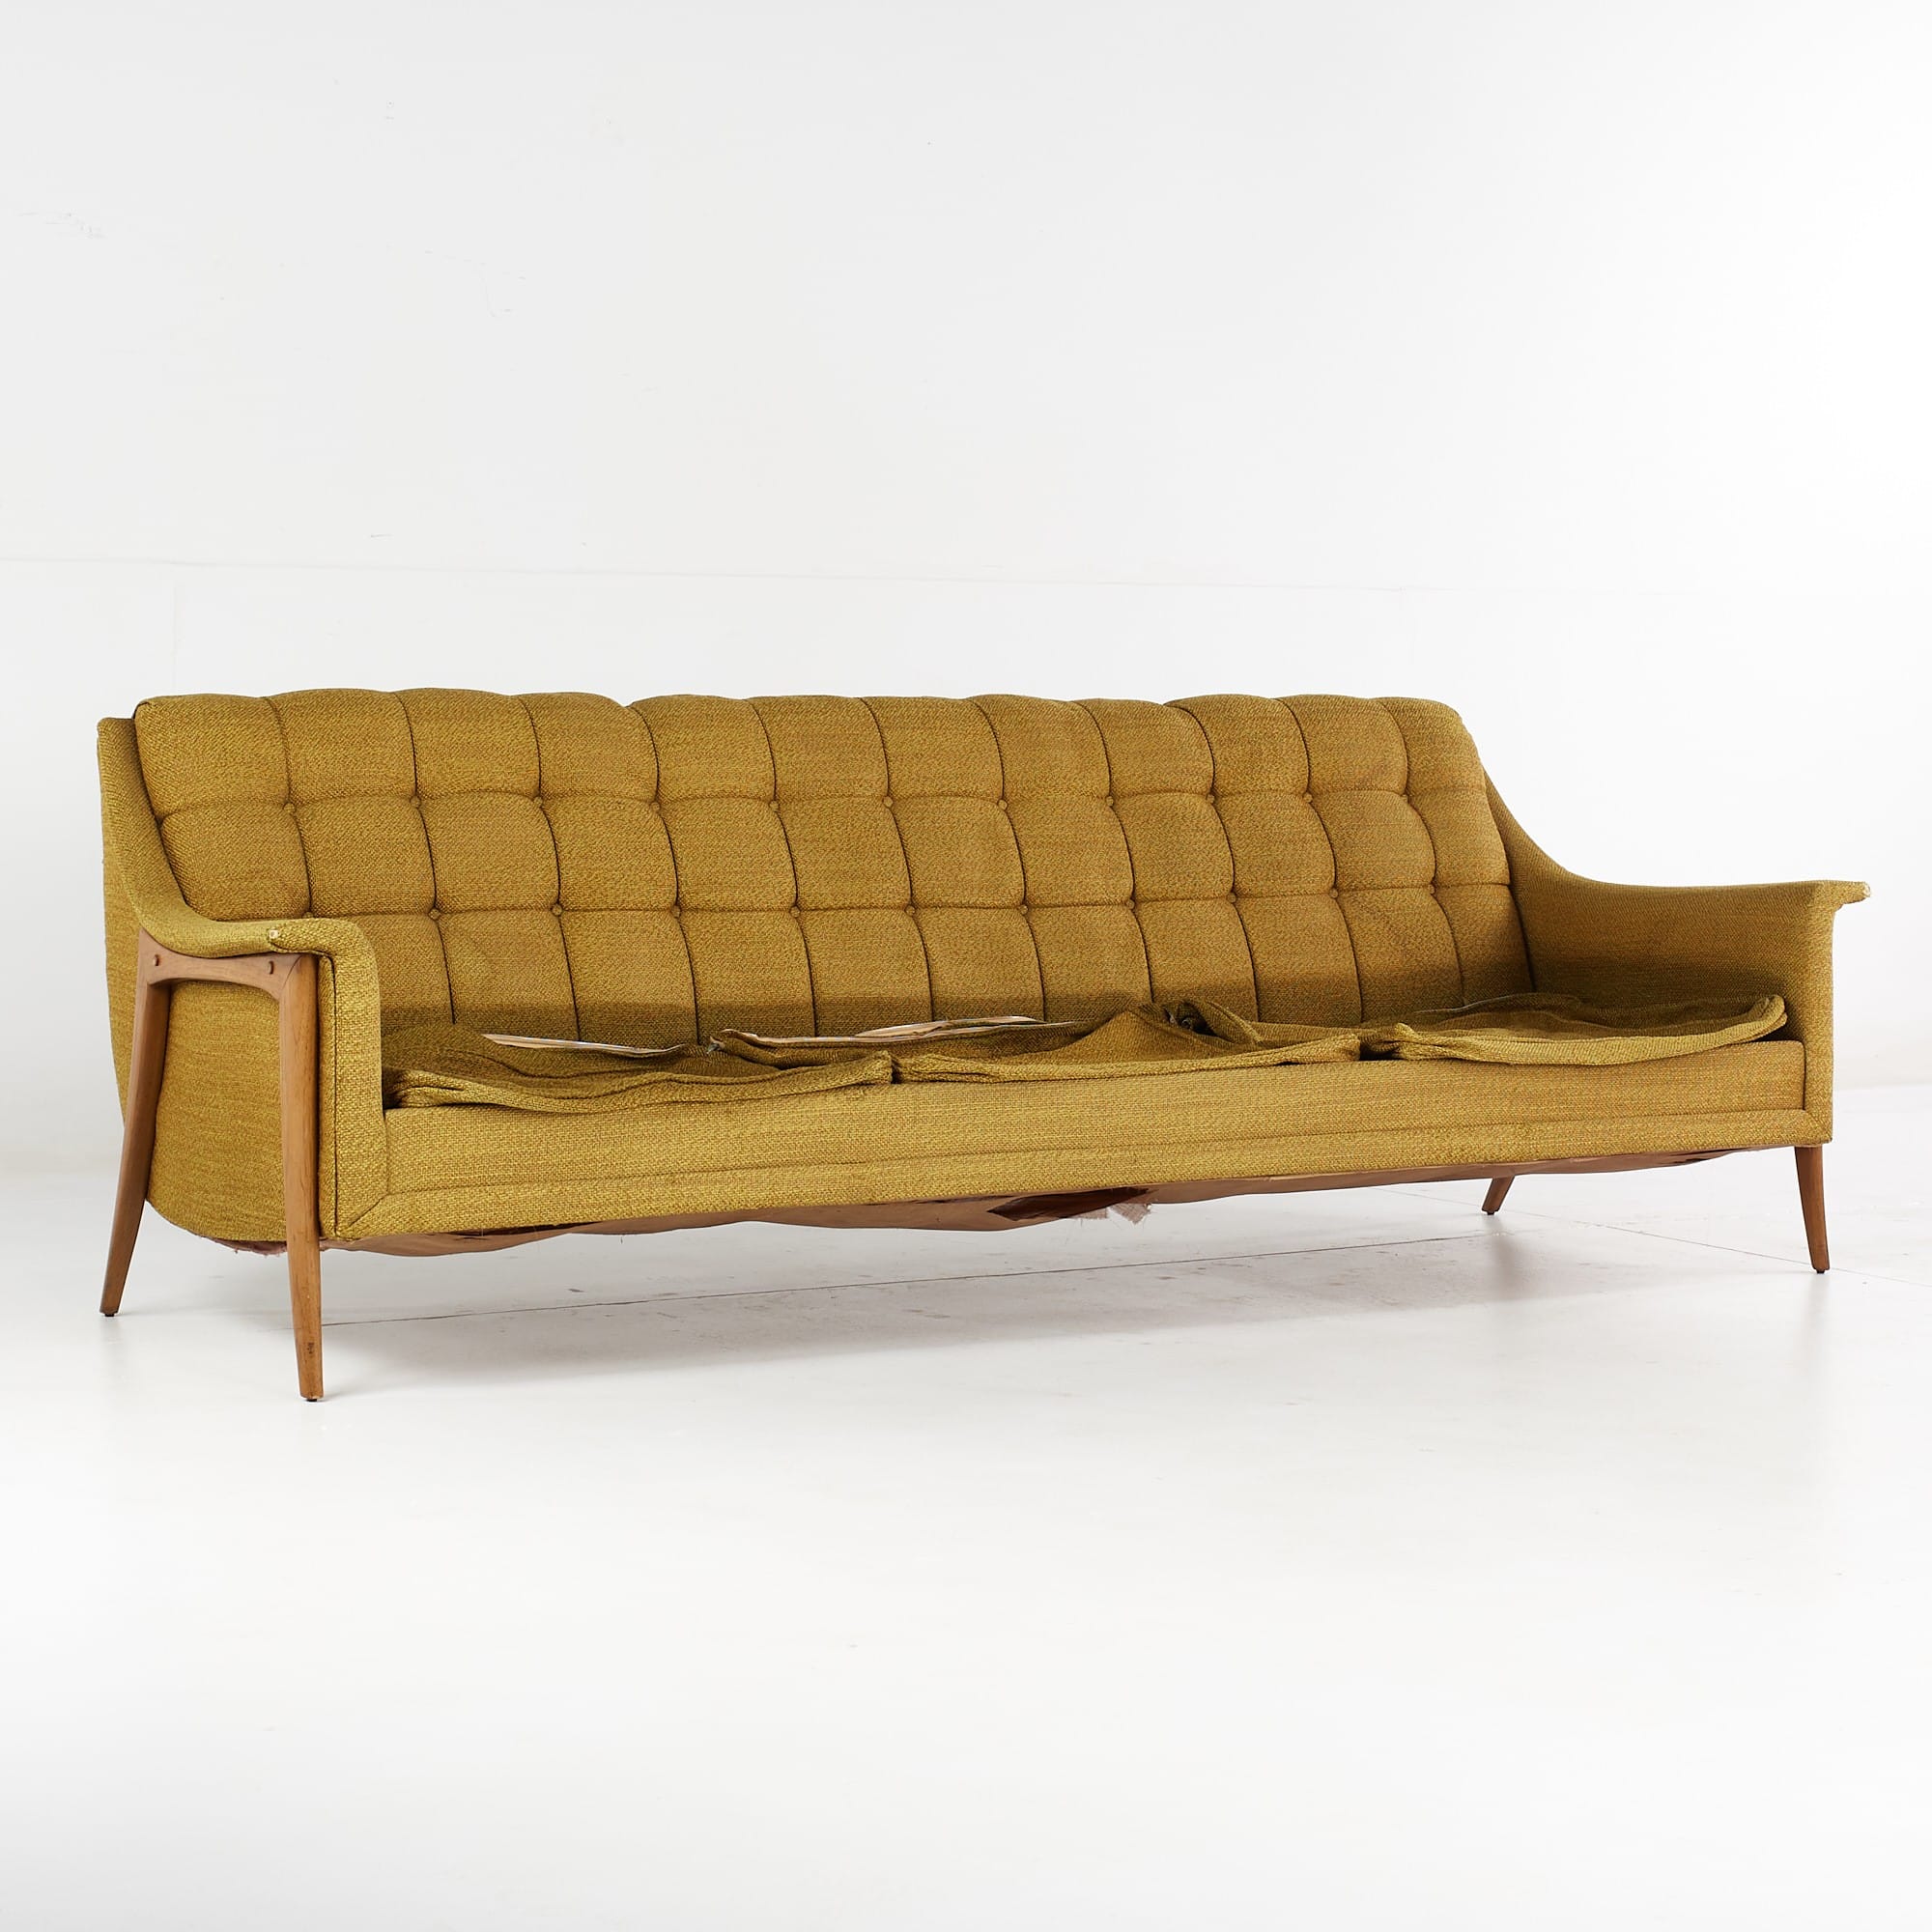 Adrian Pearsall Style Kroehler Avant Mid Century Walnut Sofa